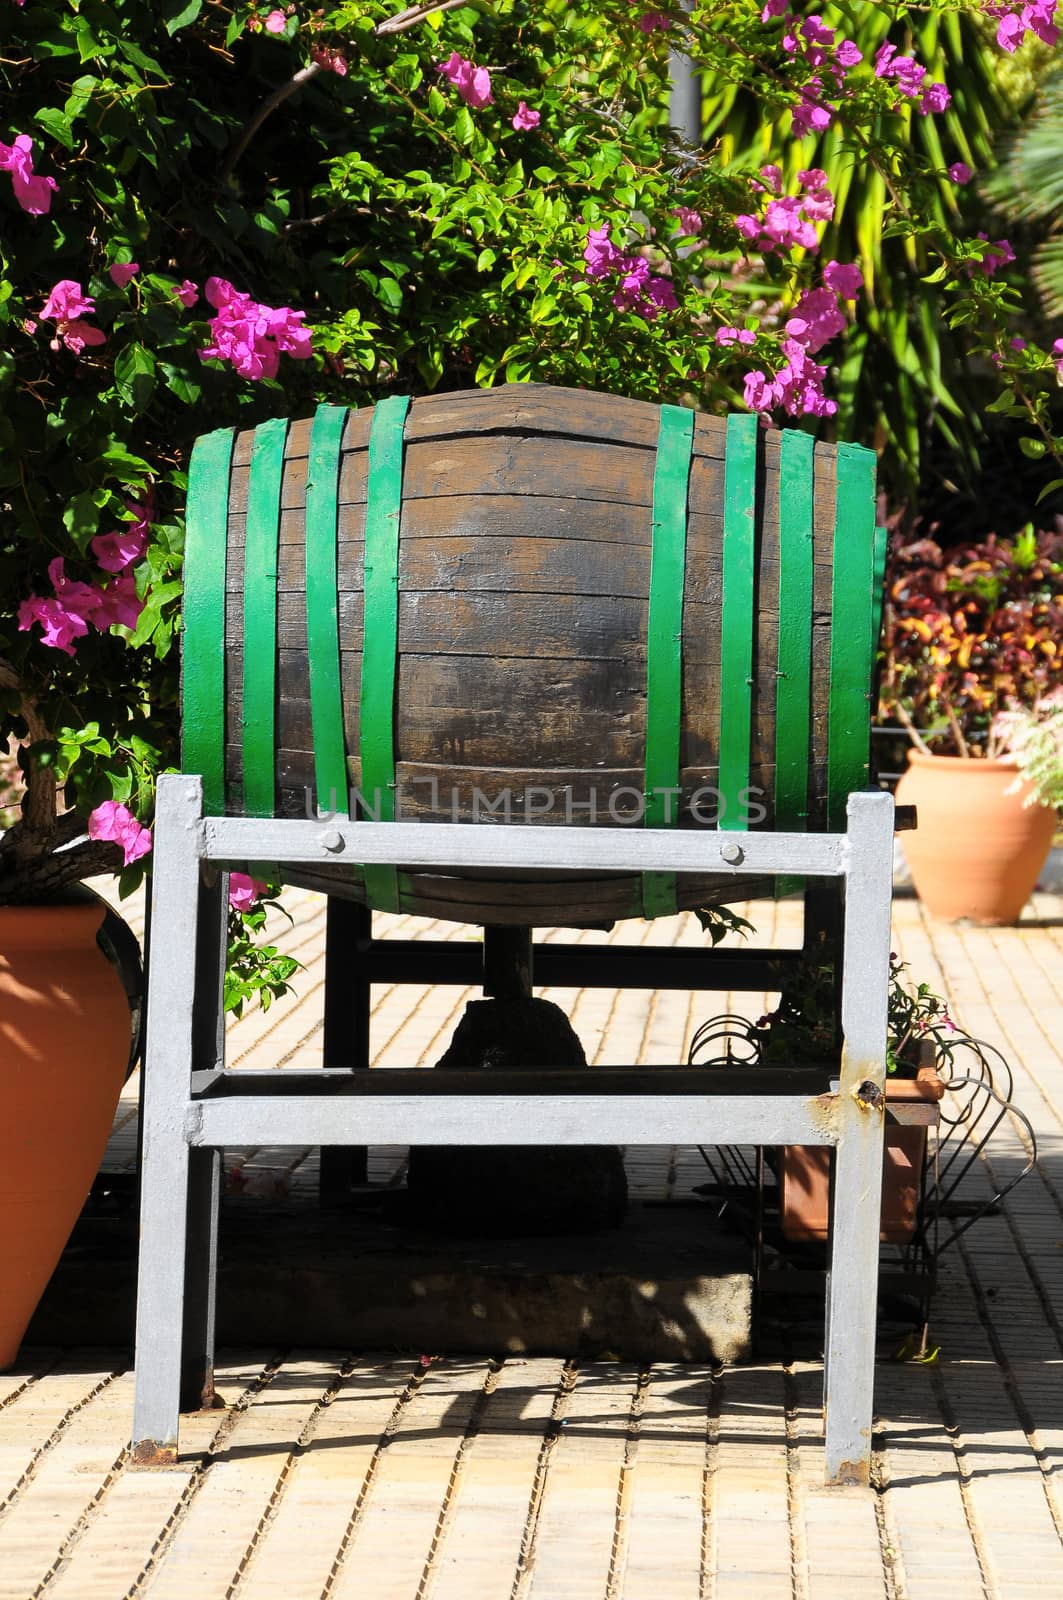 Decorative Old Wooden Barrel on an Urban Garden